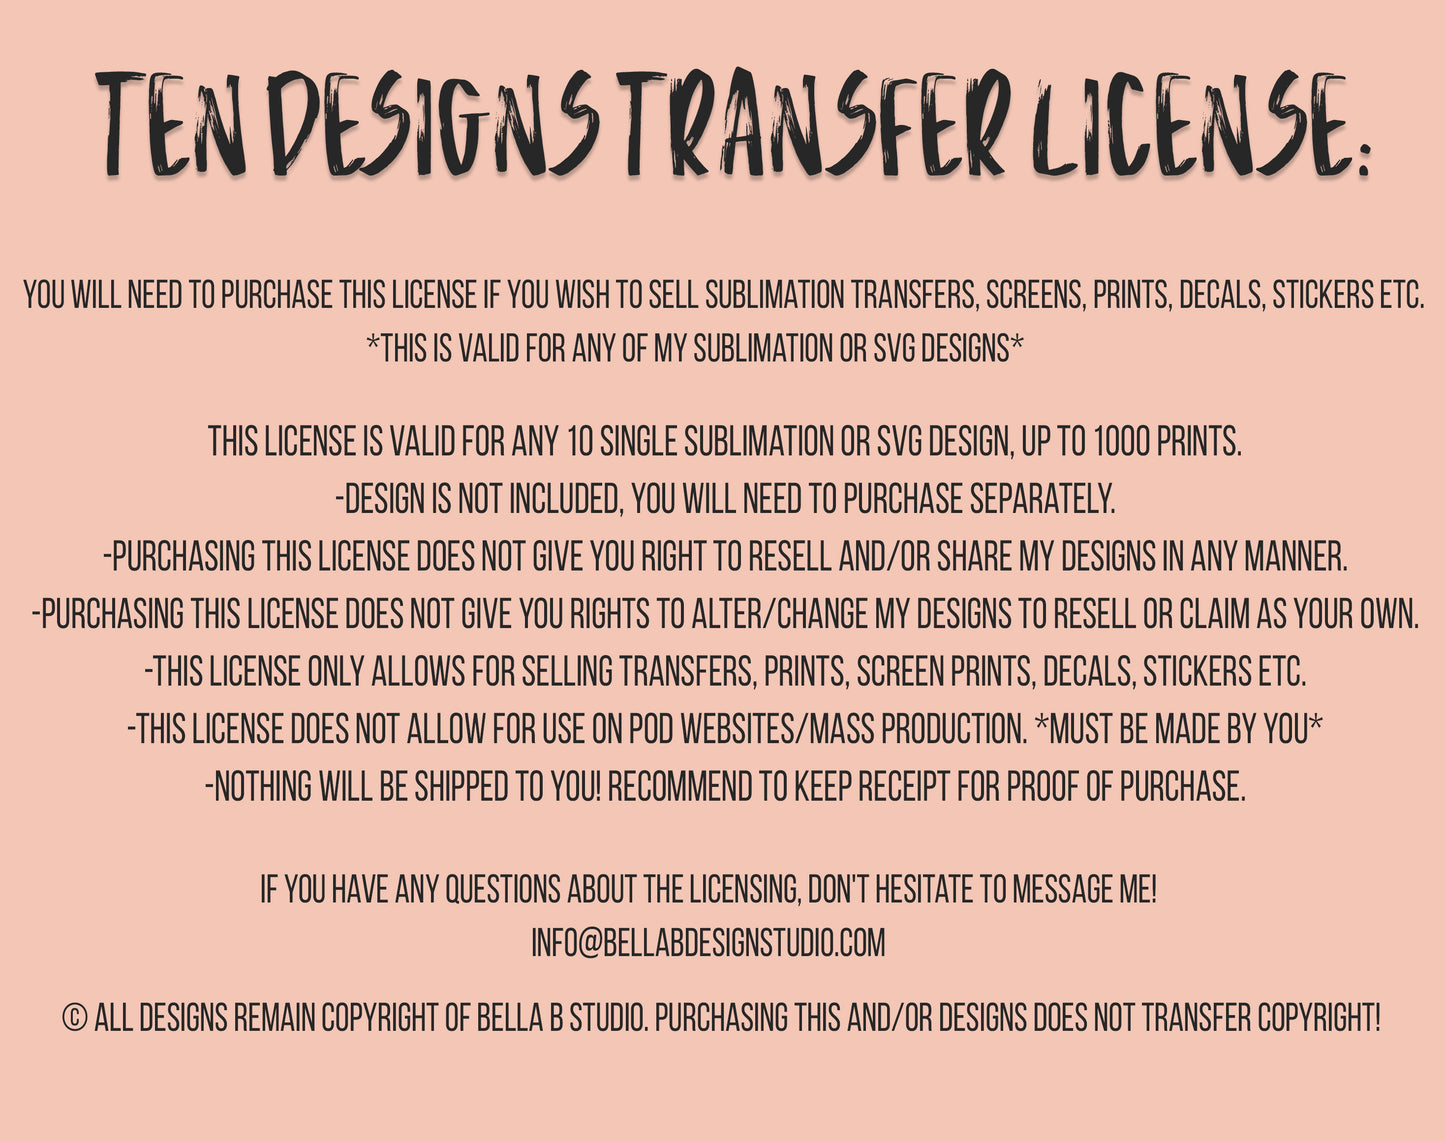 Ten (10) Designs Transfer Use License